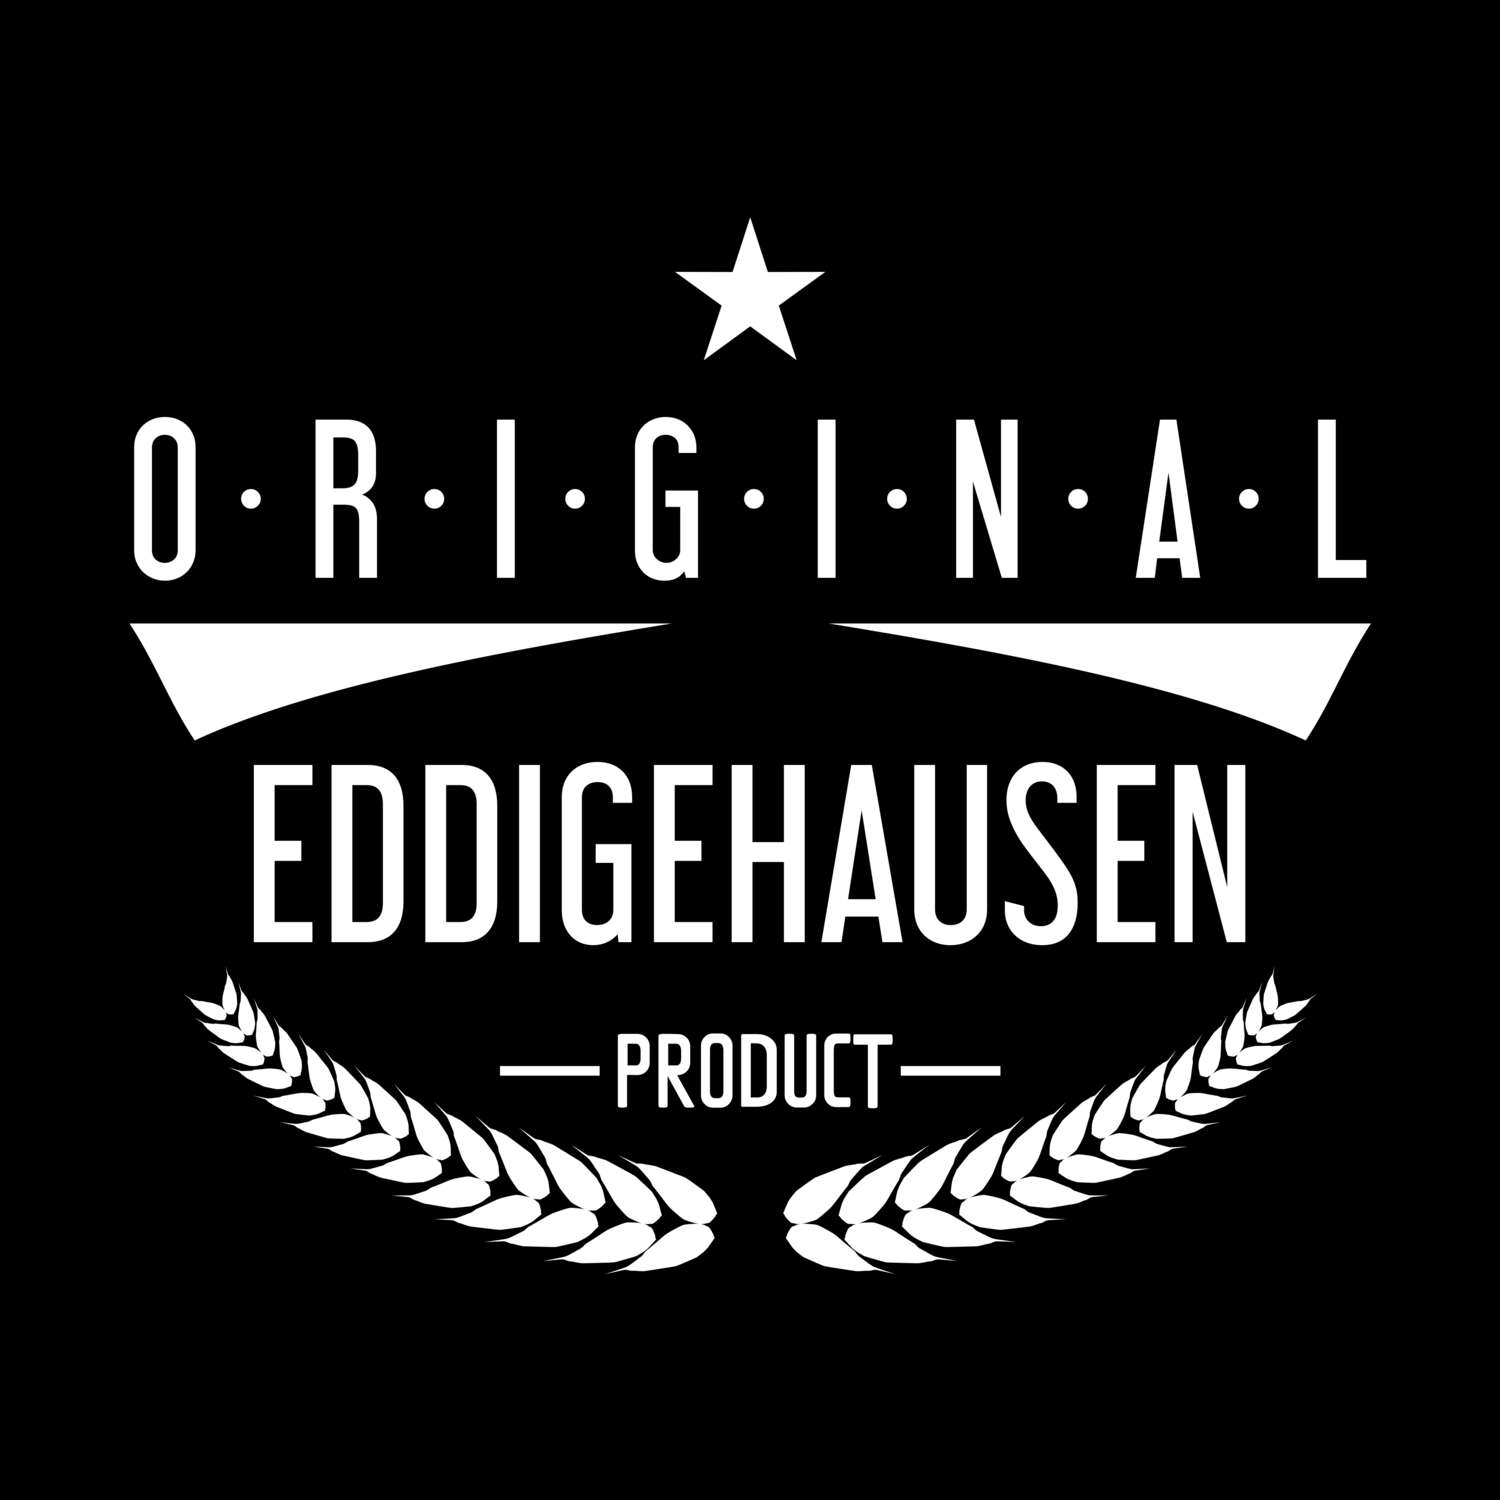 Eddigehausen T-Shirt »Original Product«